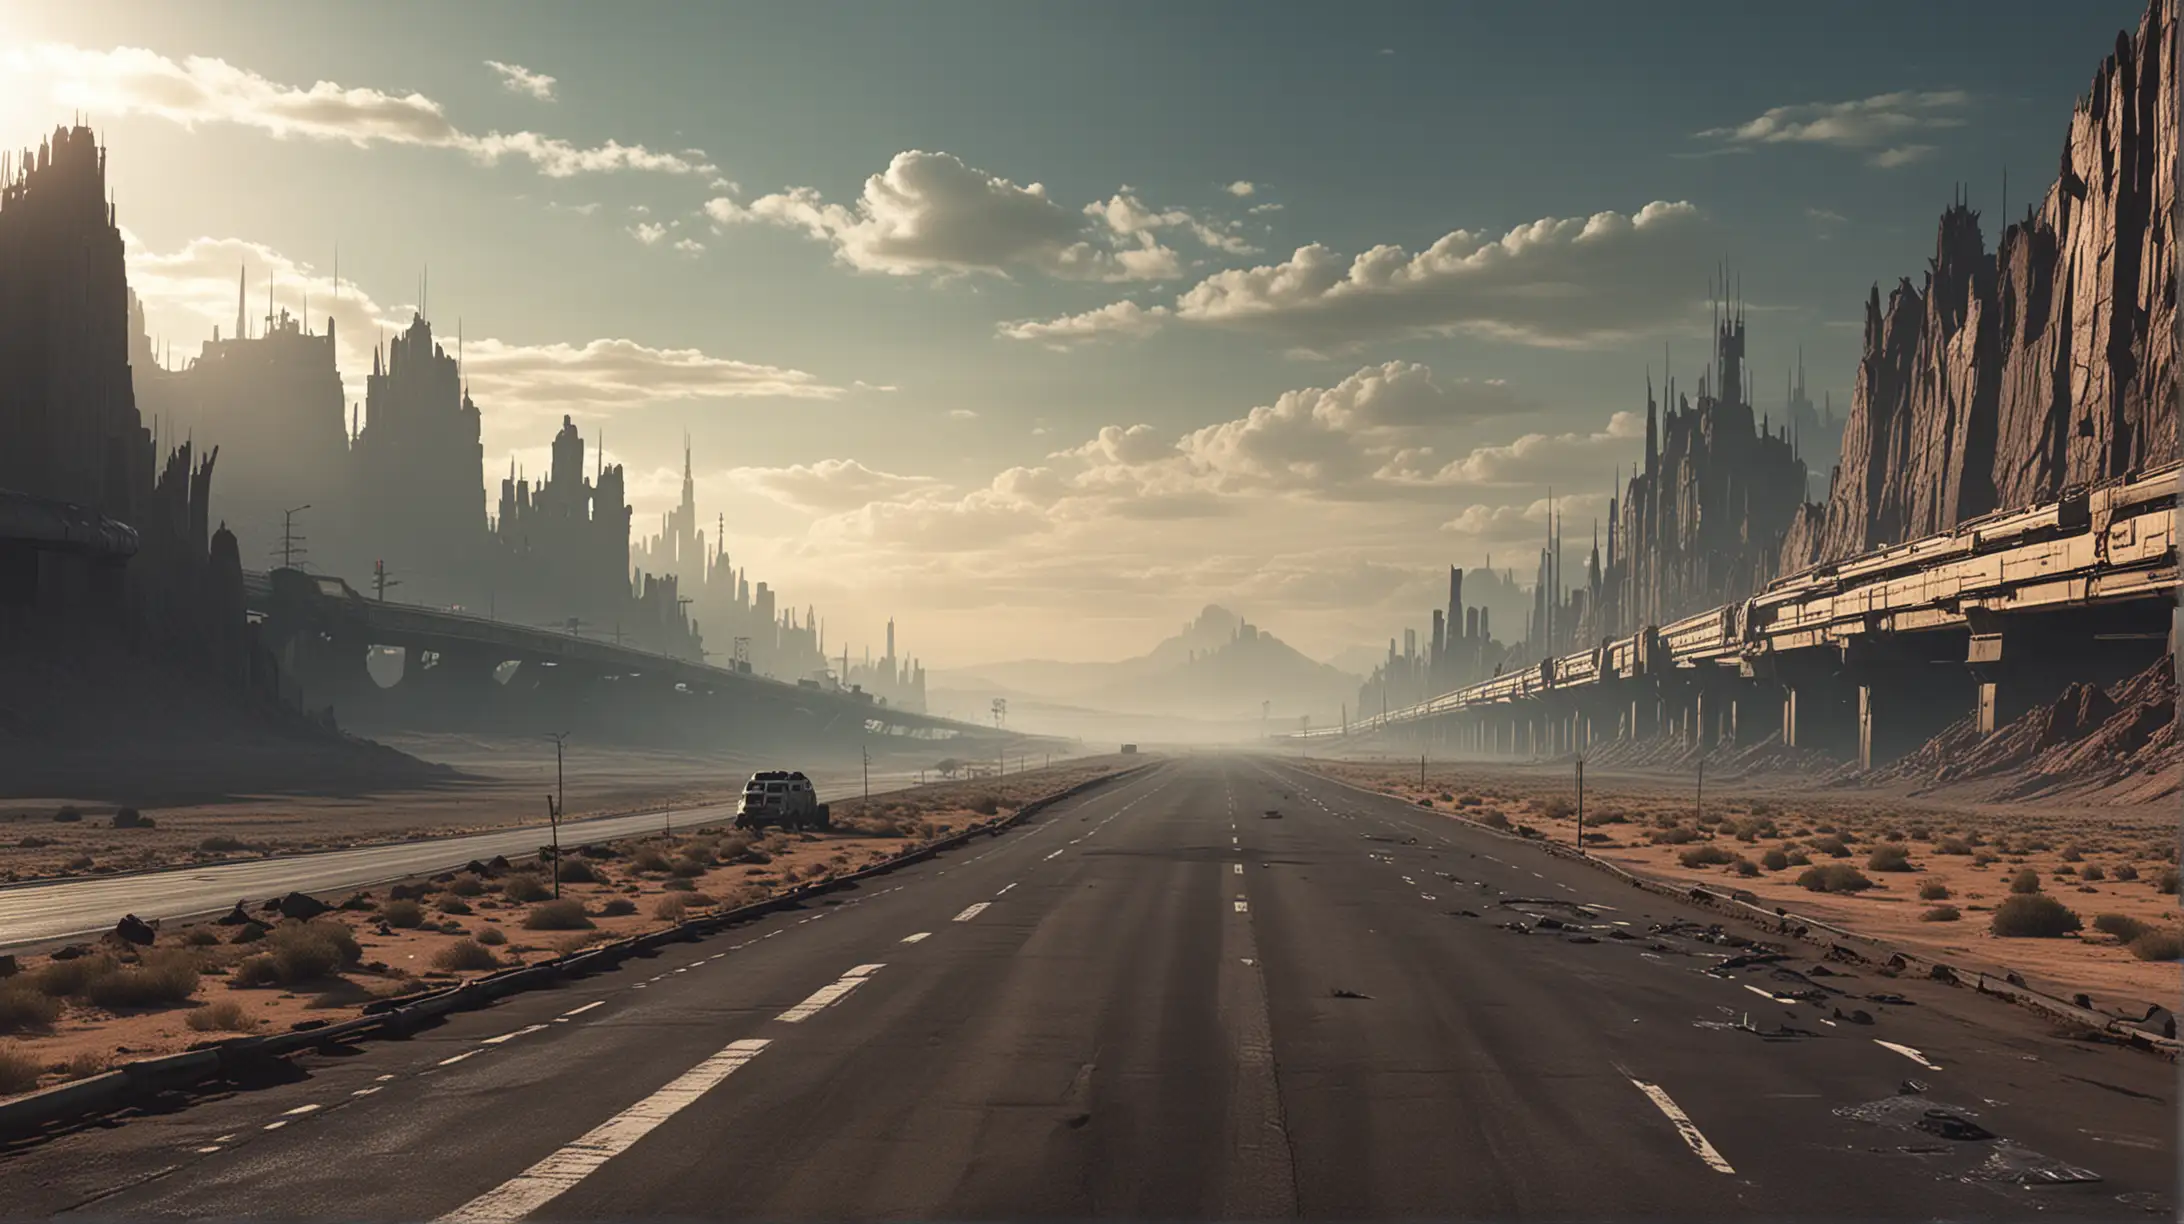 irradiated wasteland, long highway, futuristic, sci-fi